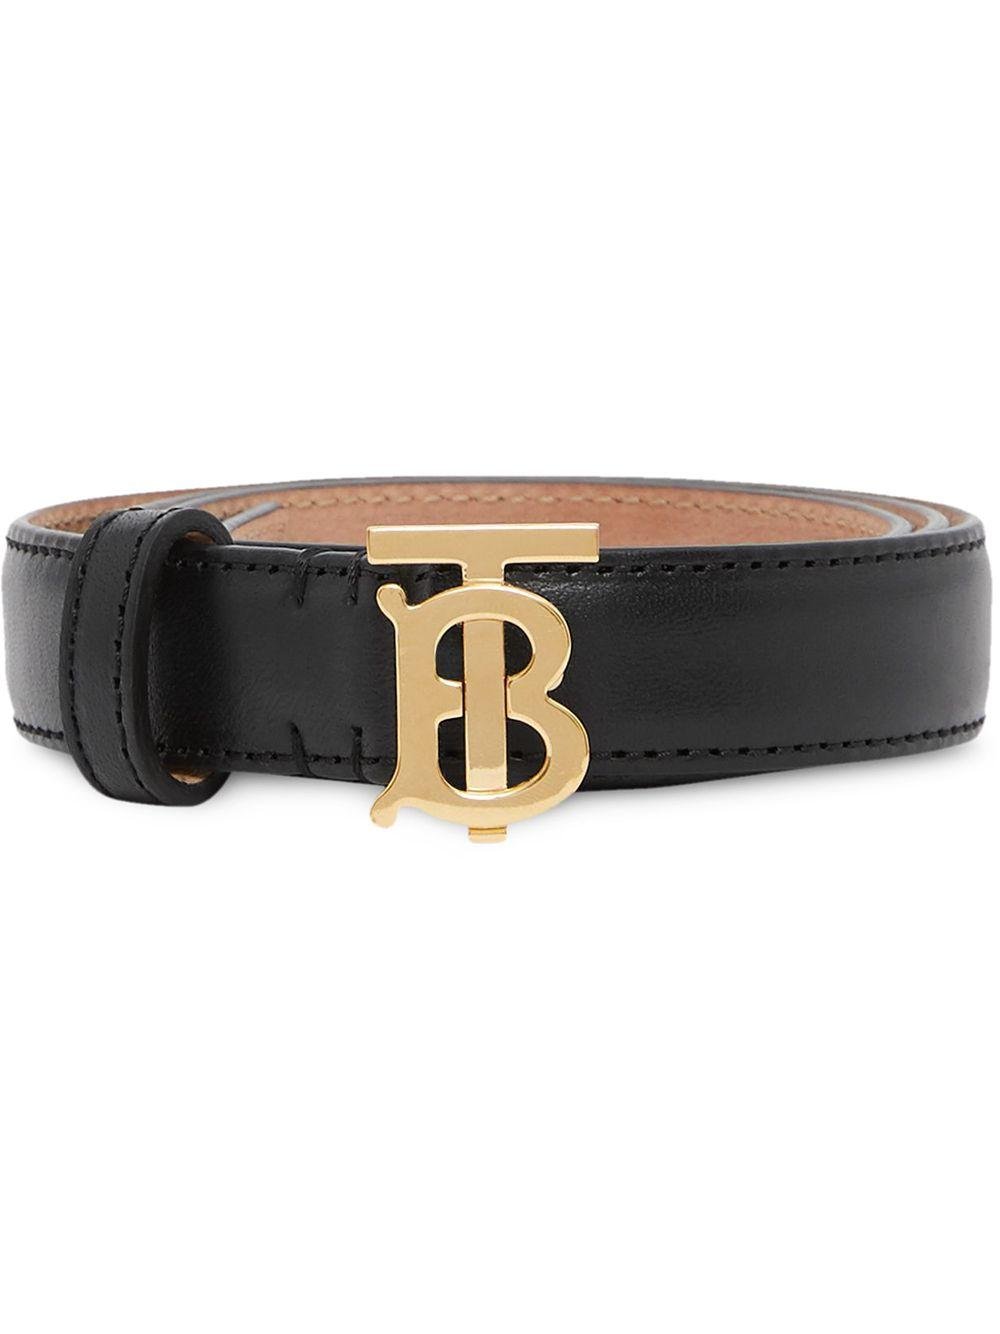 Burberry Leather Tb Monogram Belt in Black - Save 21% - Lyst